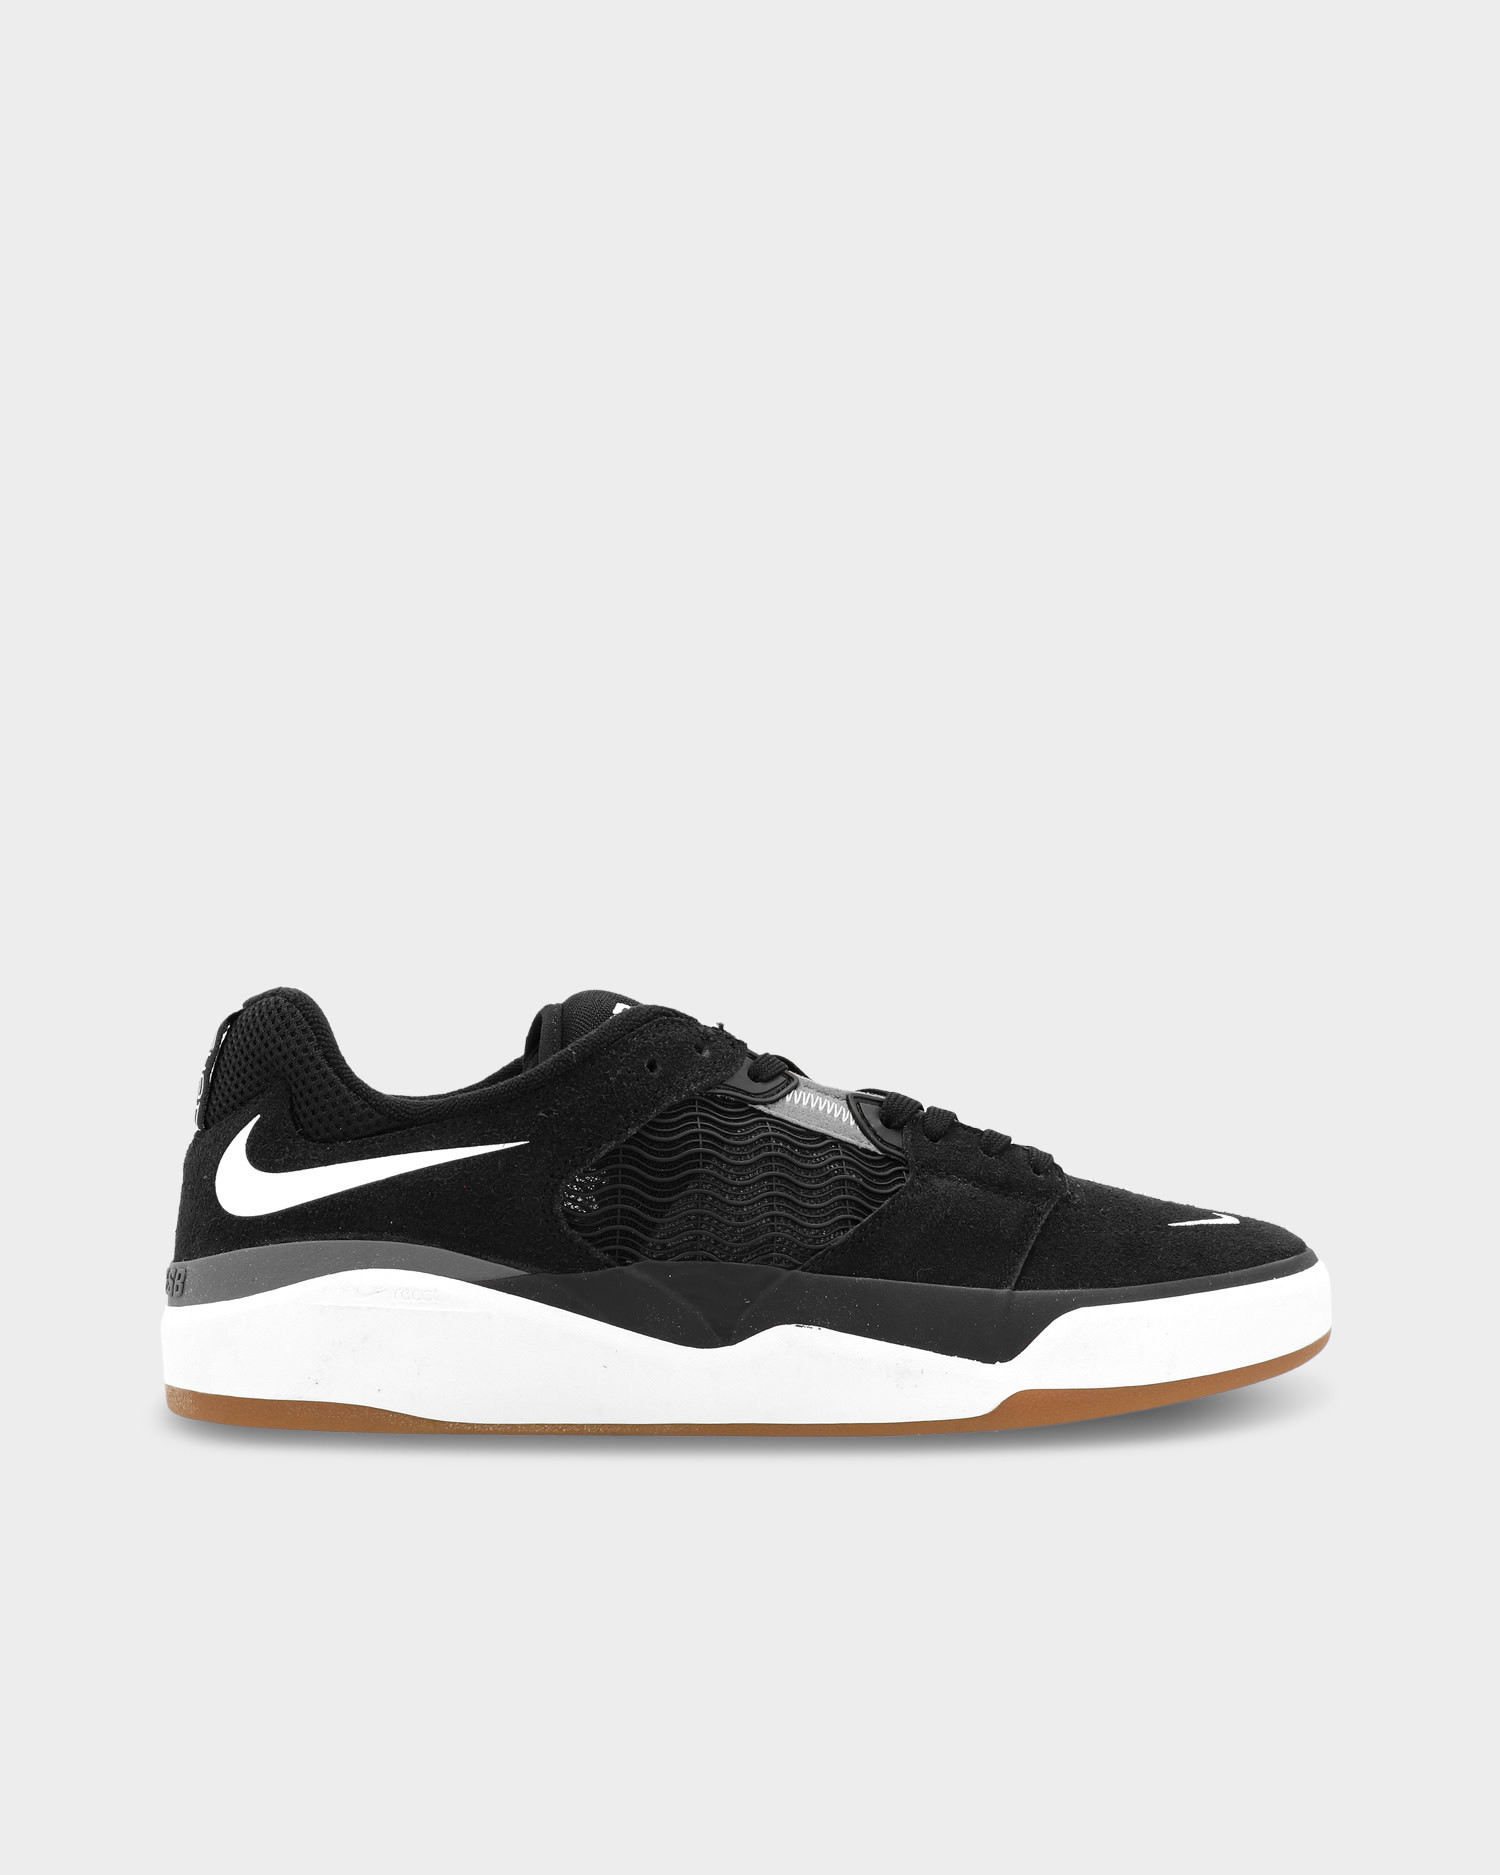 Nike Sb Ishod Wair Black/white-dark grey-black